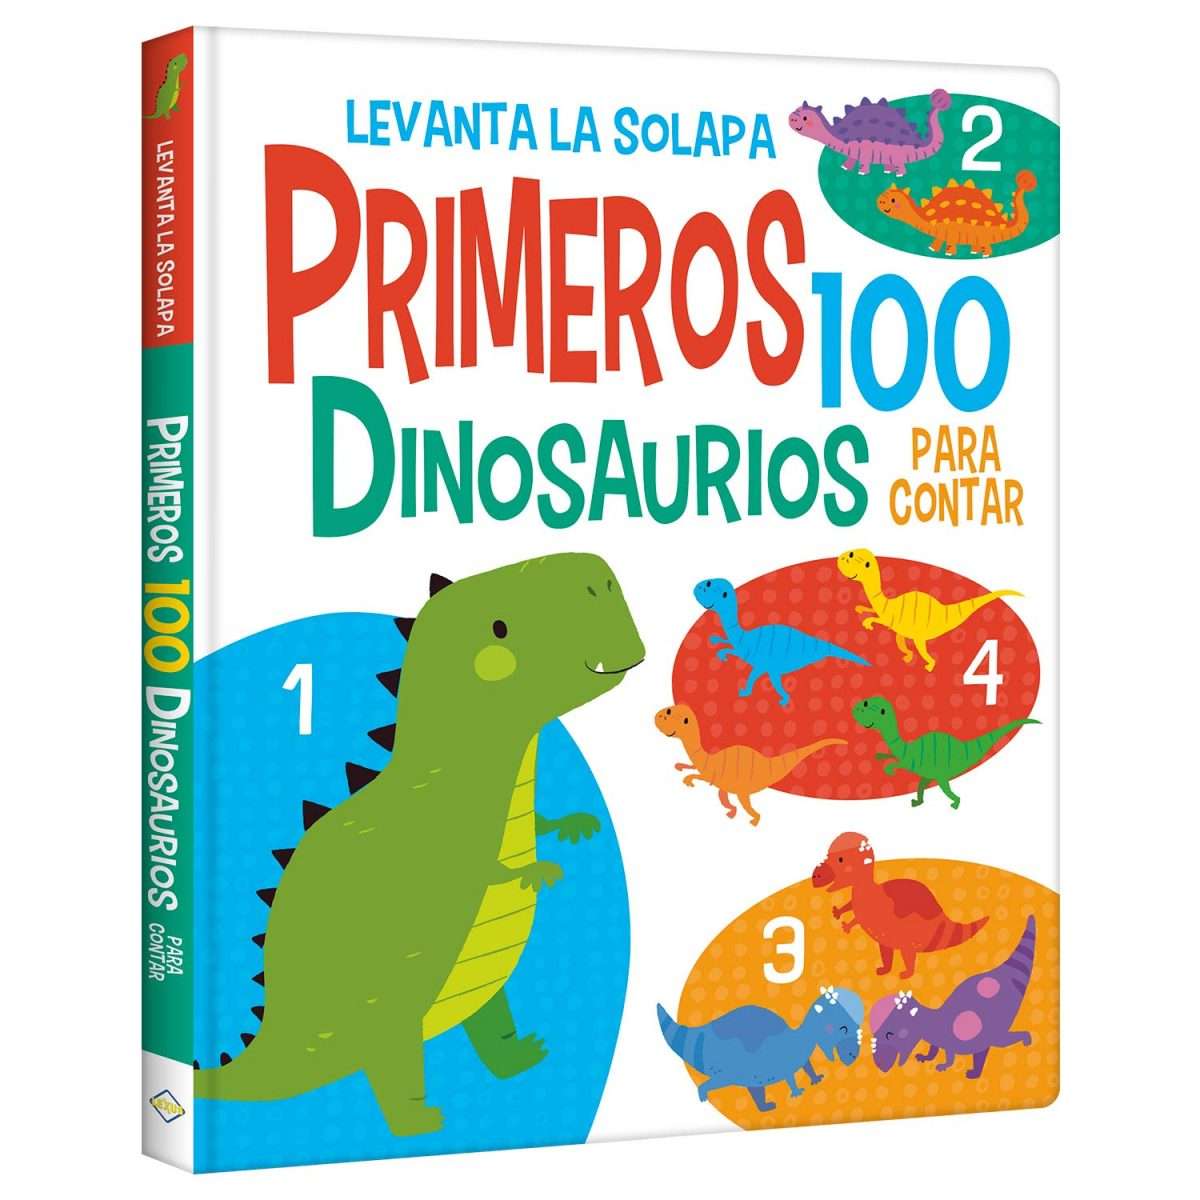 Primeros 100 Dinosaurios para Contar